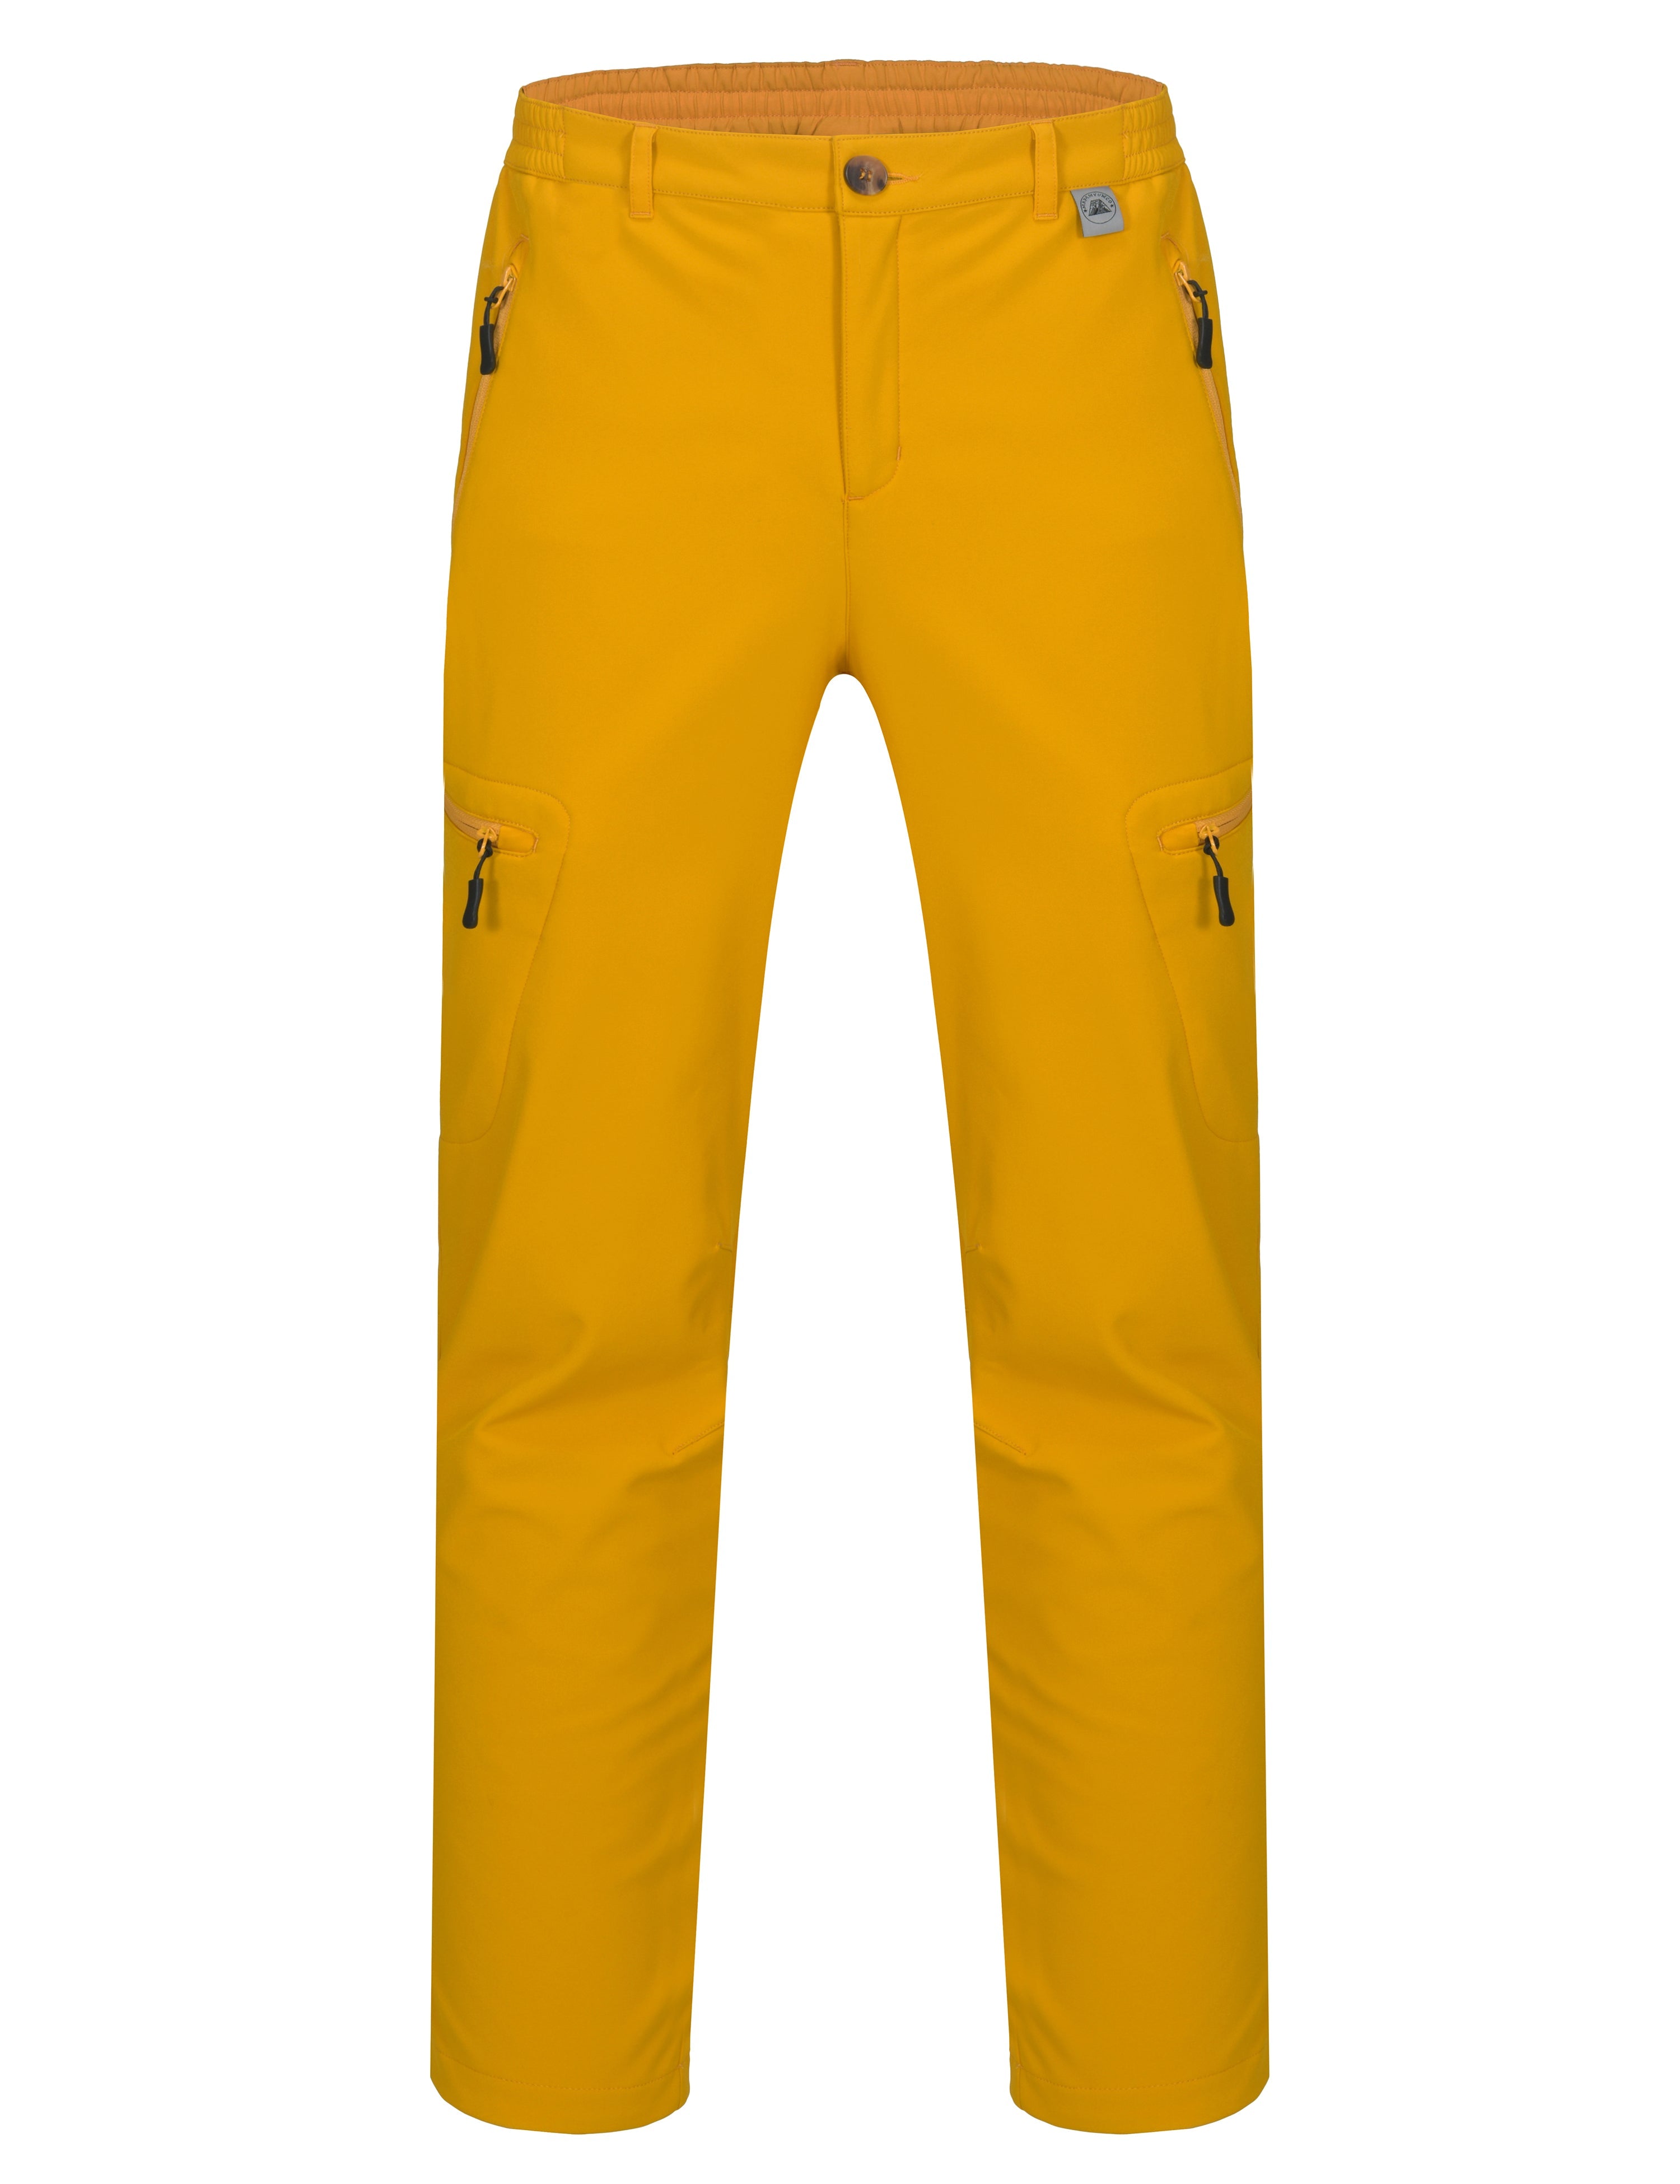 mens fleece lined insulated softshell snow hiking pants mp1340 mp us mp cs yellow s 619650